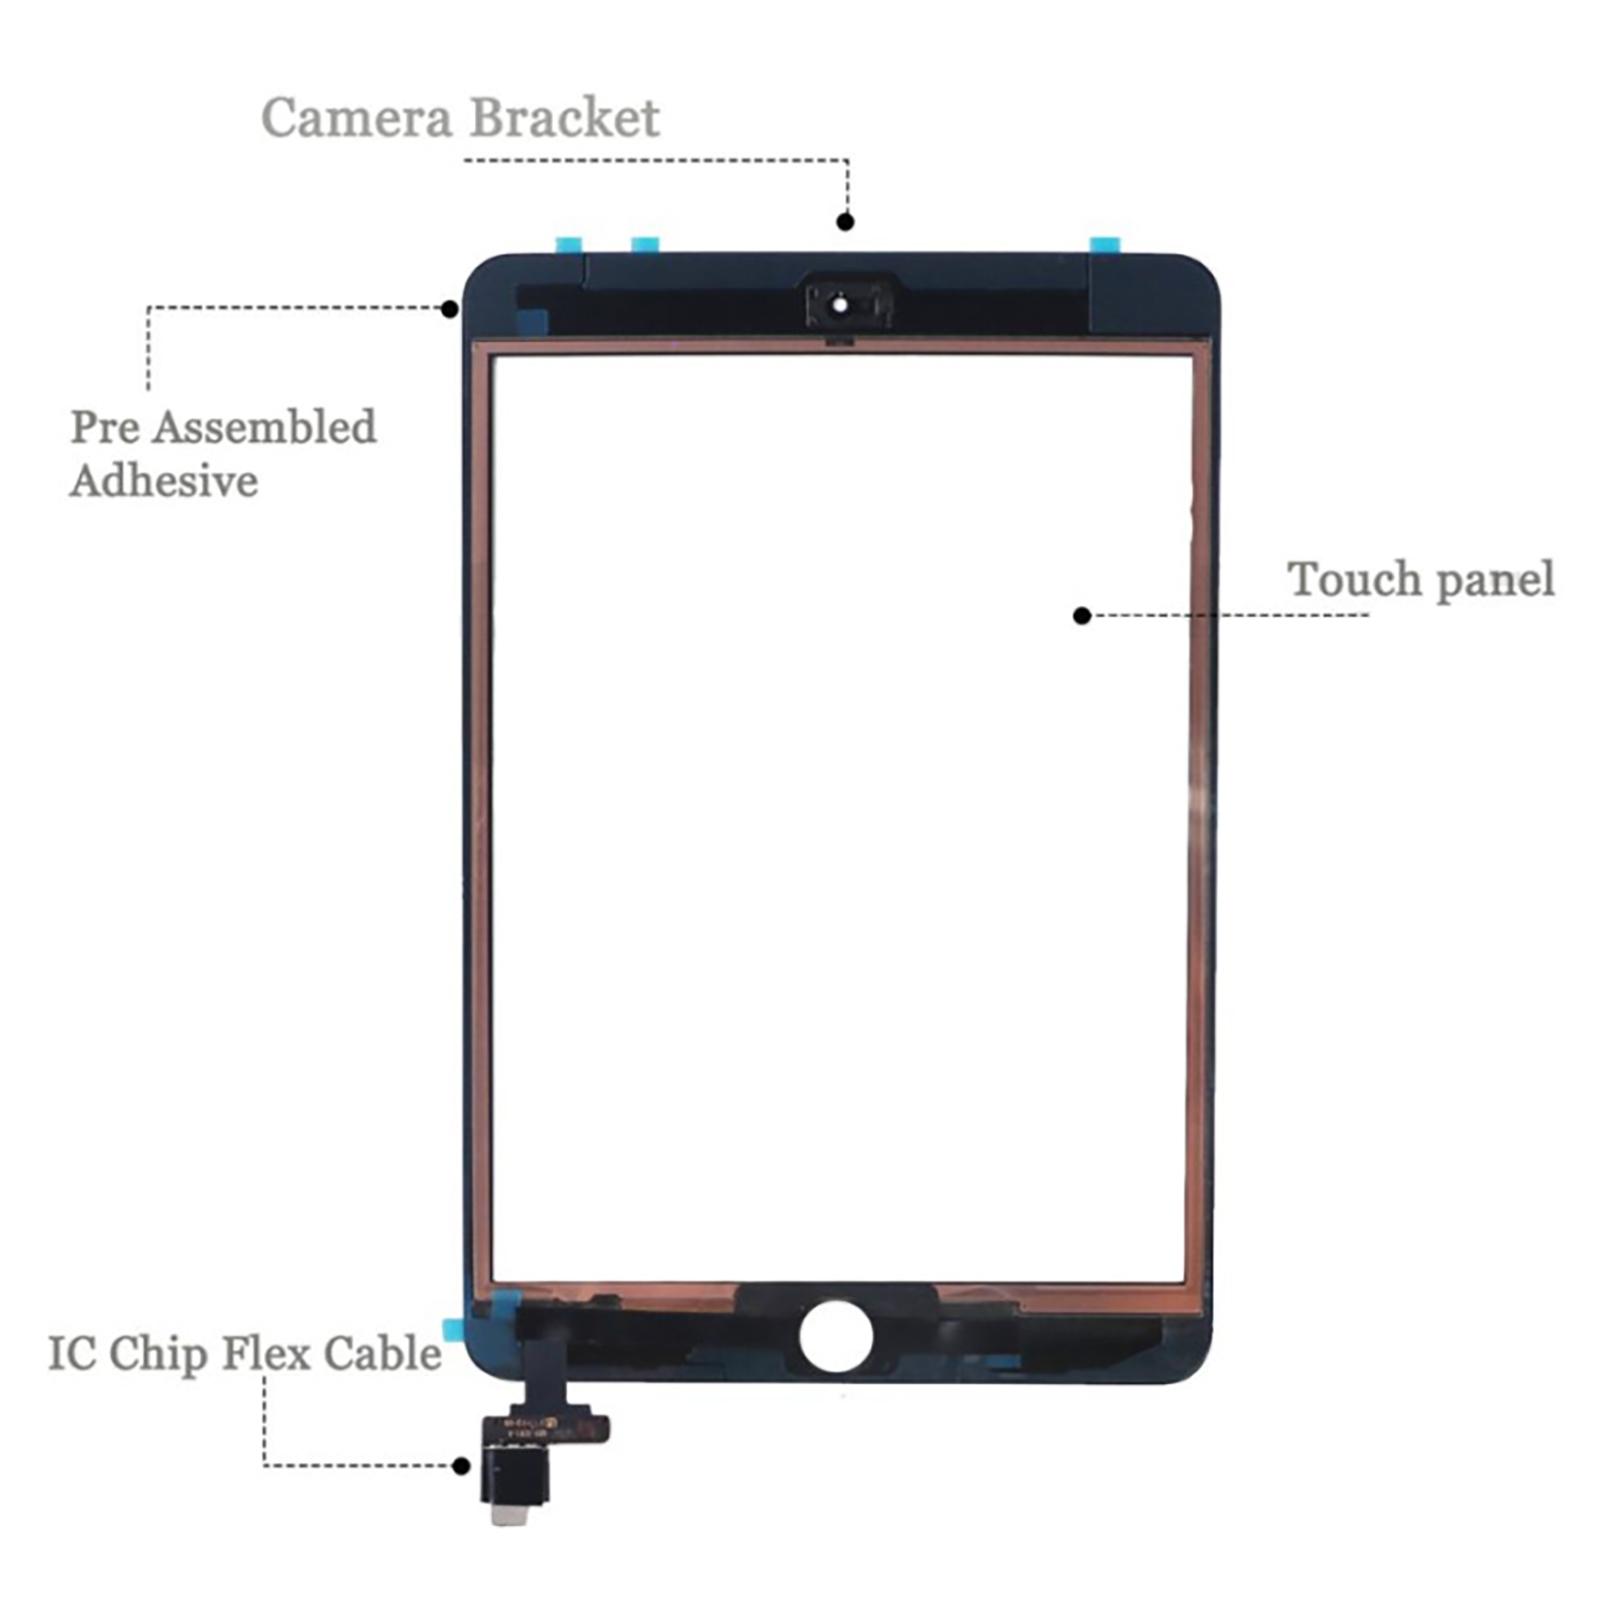 Изображение товара: Сенсорный экран для iPad Mini3, дигитайзер без кнопки Home, сменная сенсорная панель для ipad mini 3 A1599 A1600